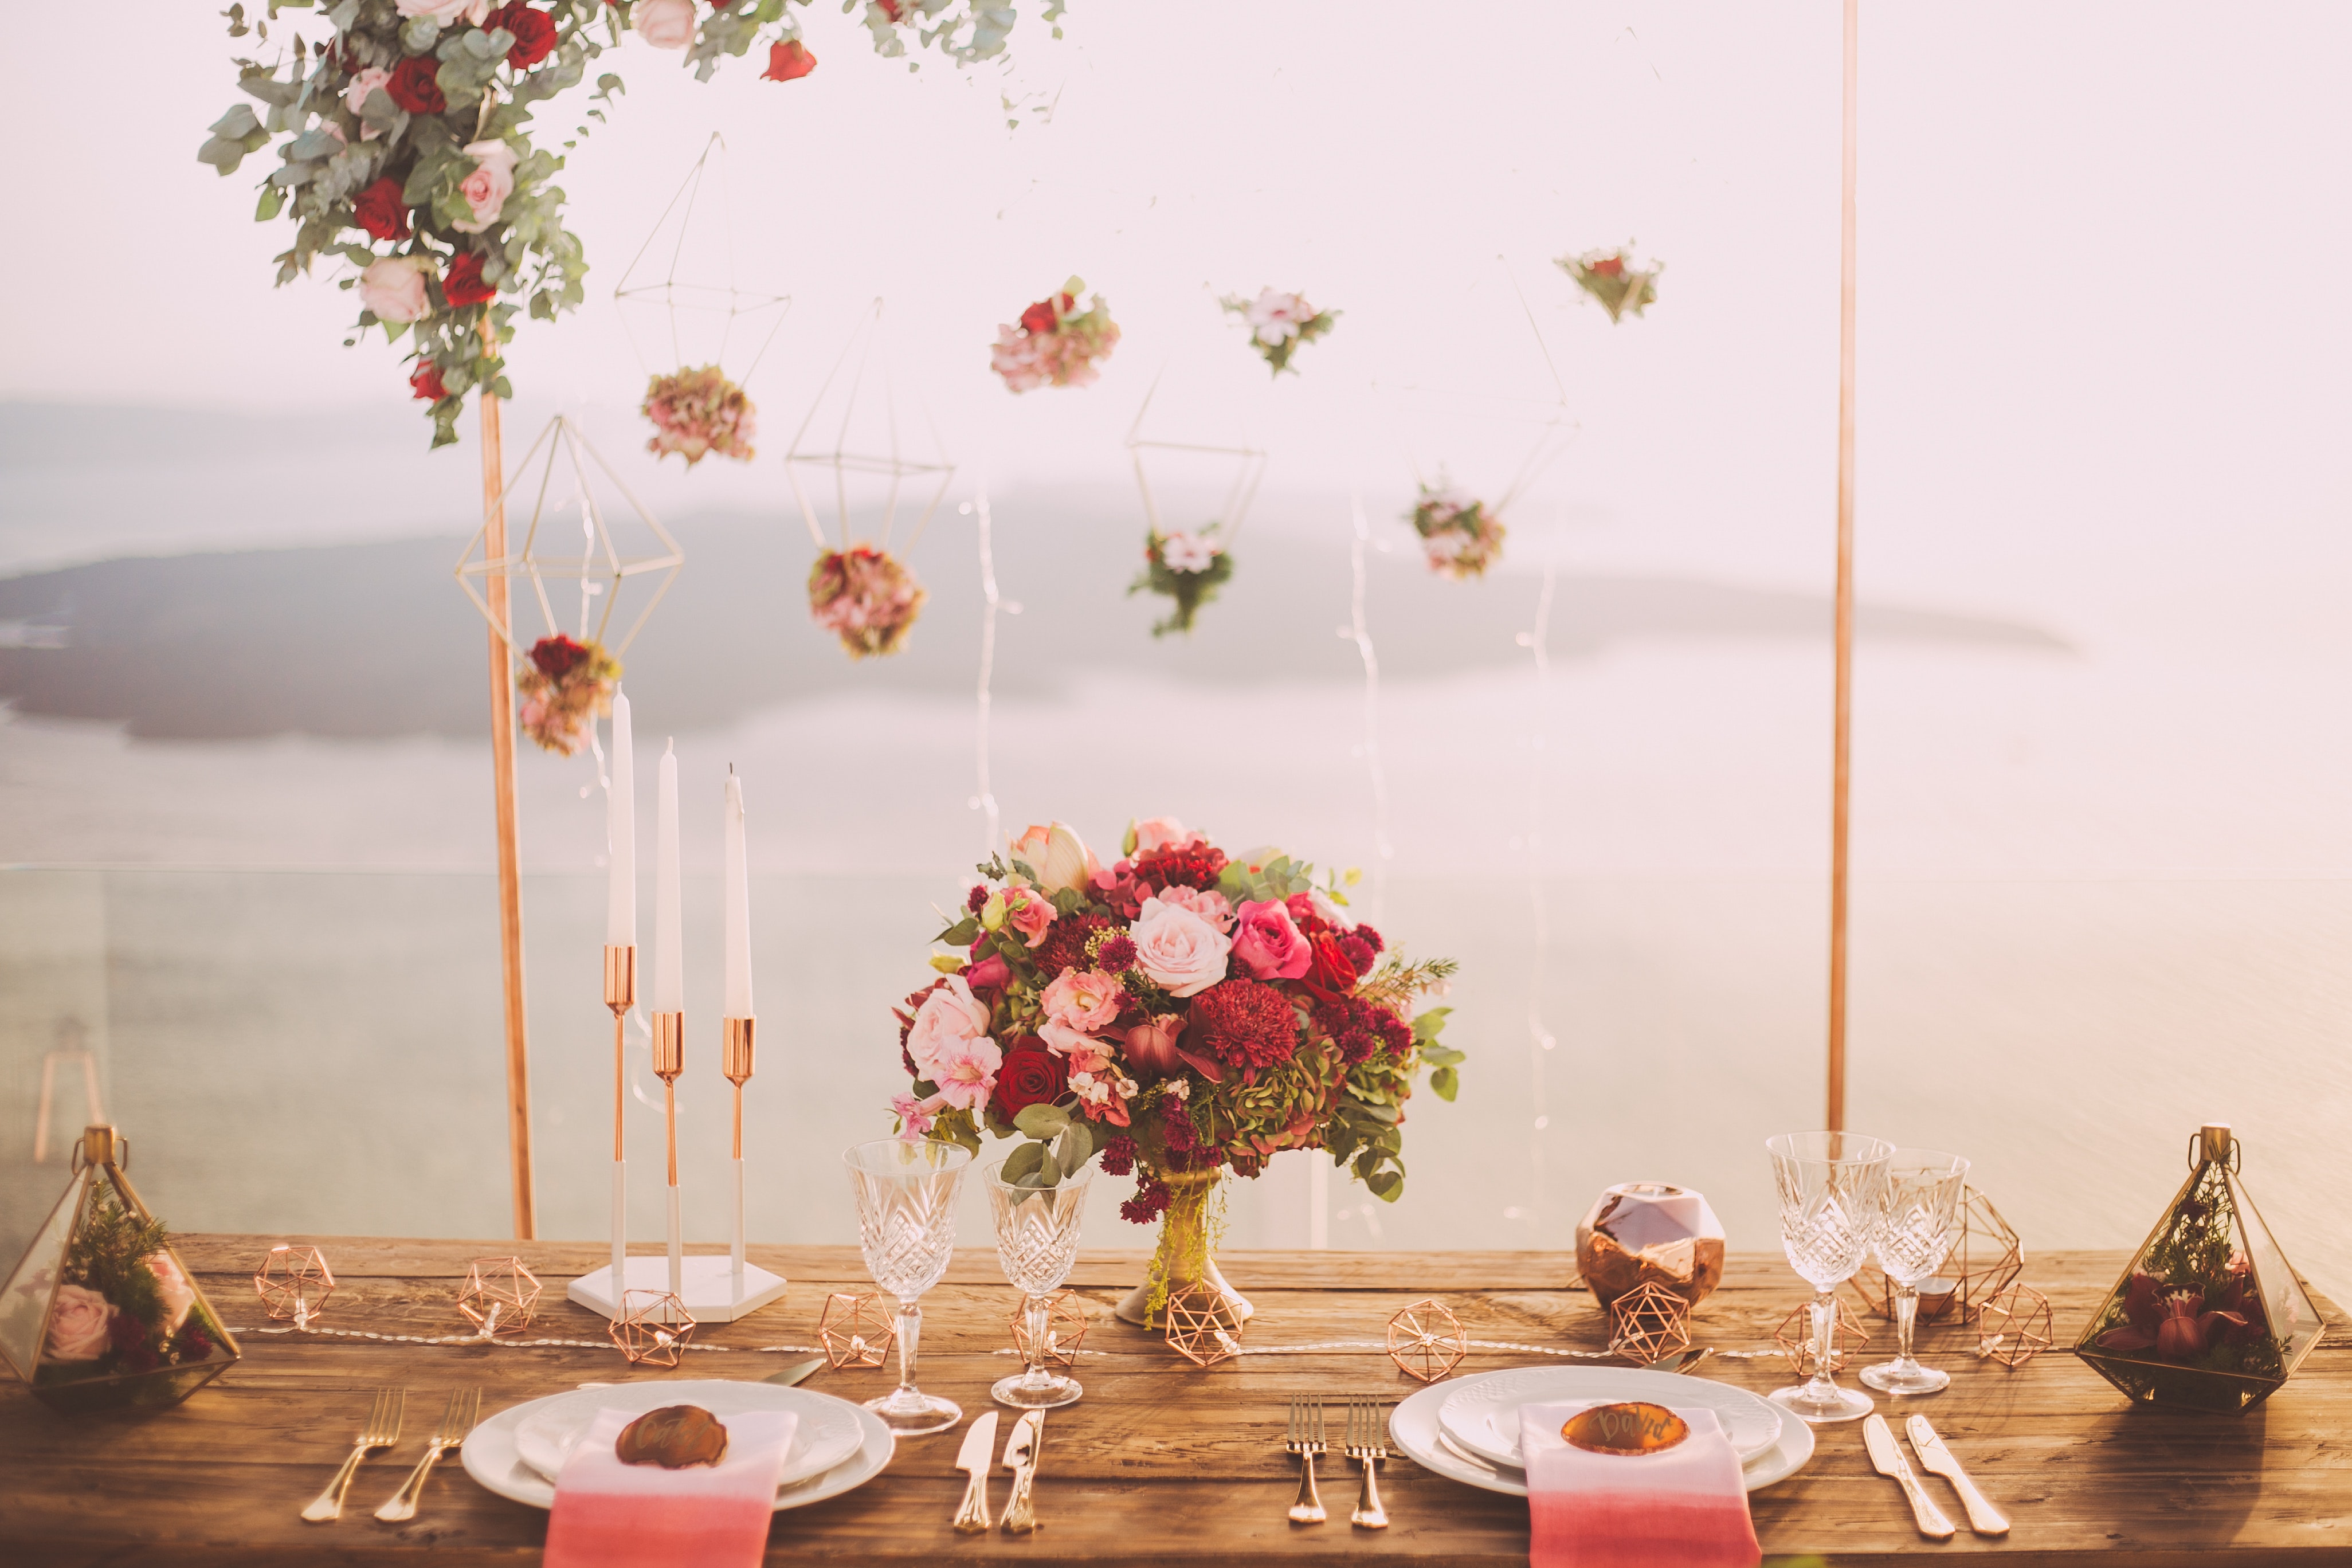 3 Breathtaking DIY Decoration Ideas to Make Your Spring Wedding Stunning